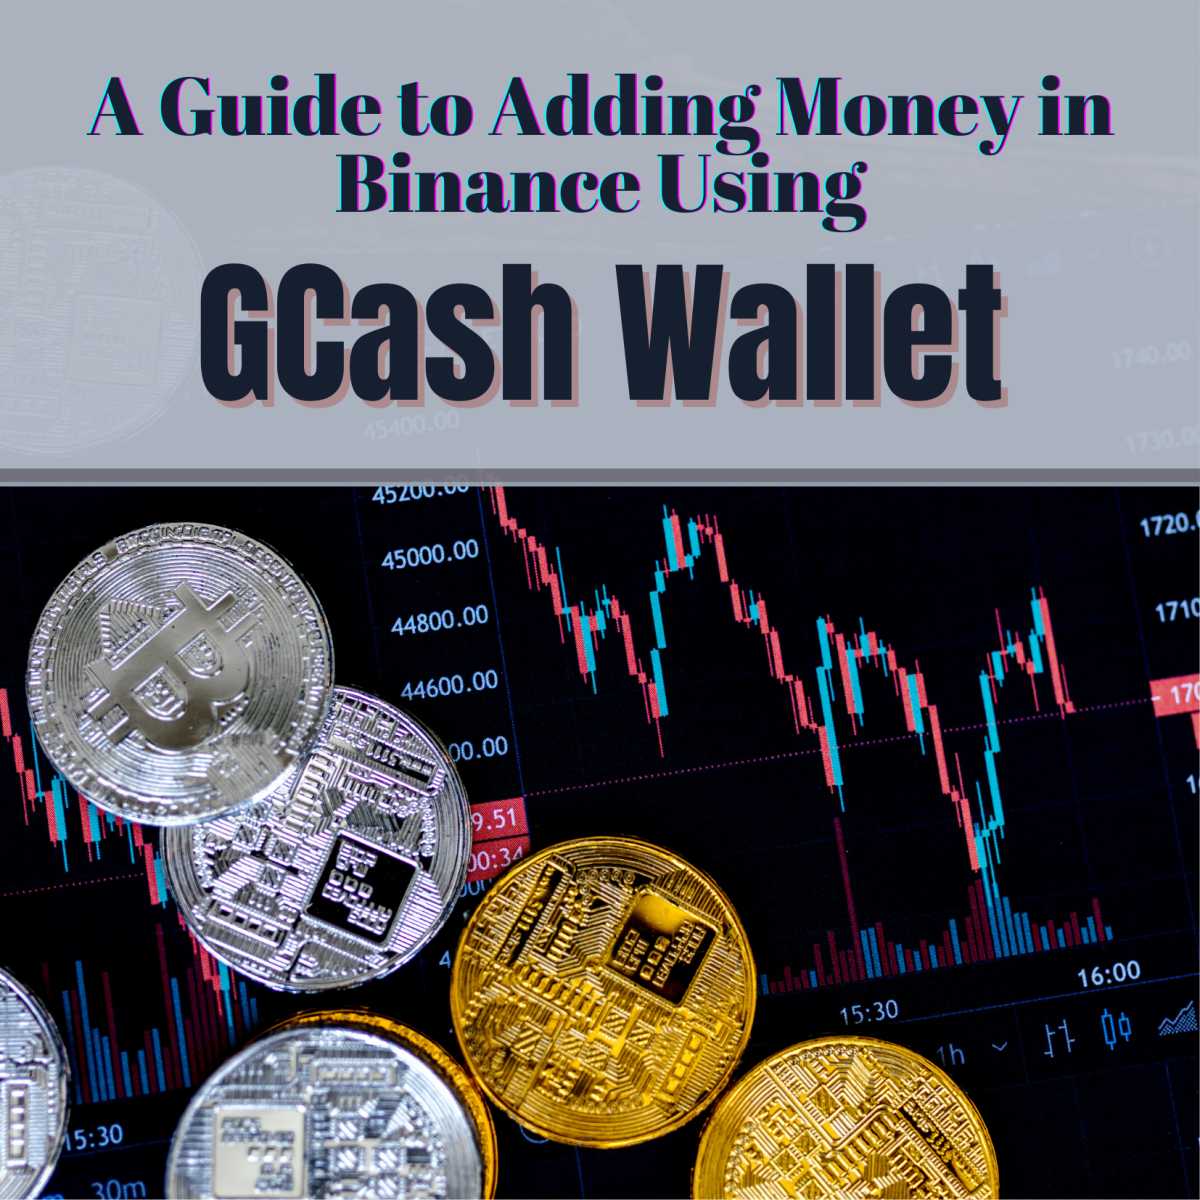 How to Add Money in Binance Using GCash Wallet